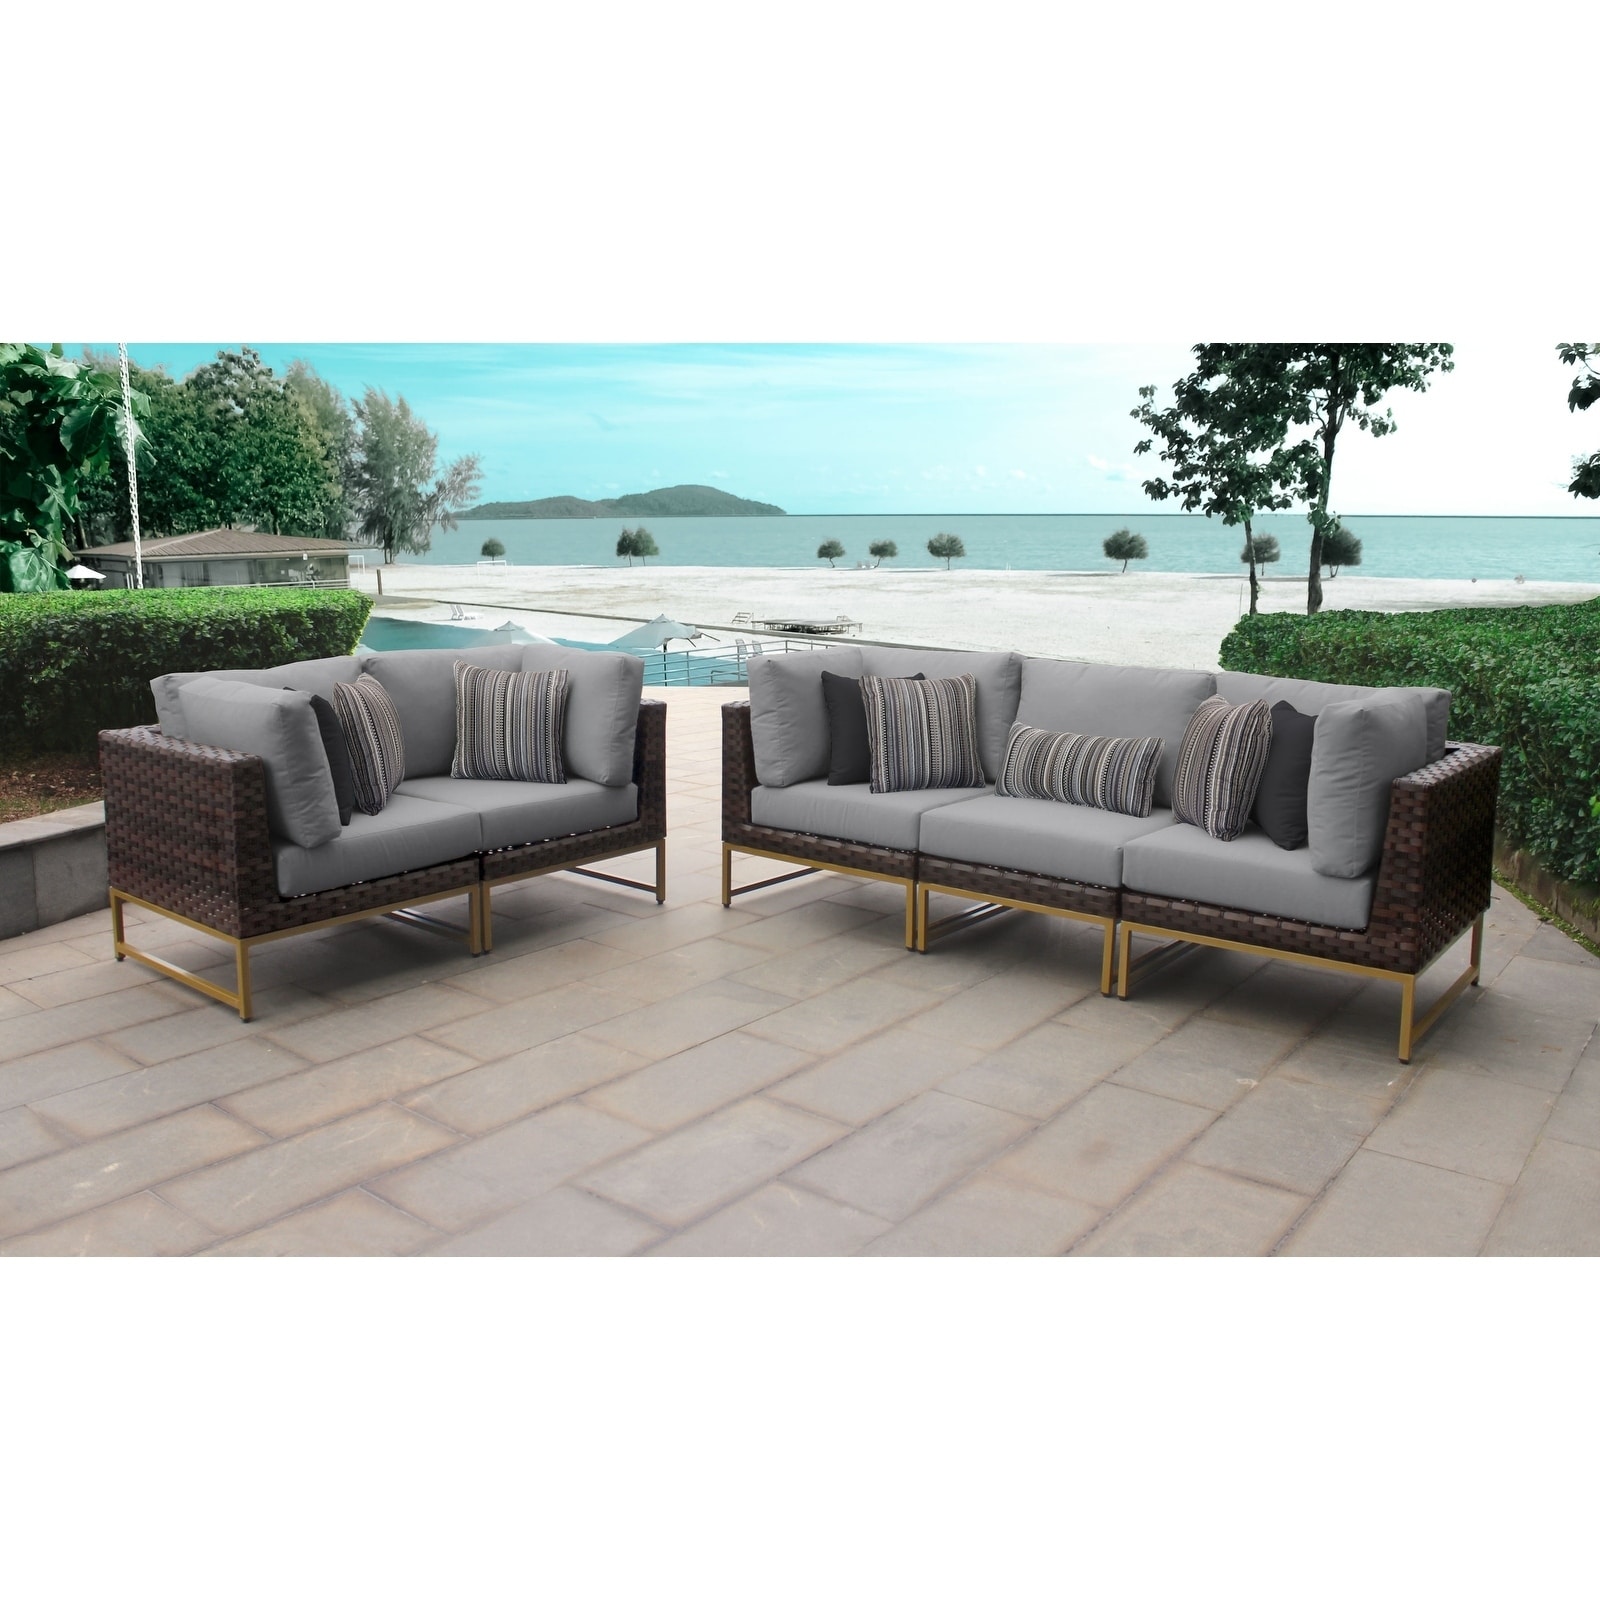 Amalfi 5 Piece Outdoor Wicker Patio Furniture Set 05a -  TK Classics, BRCLN-05a-GLD-GREY